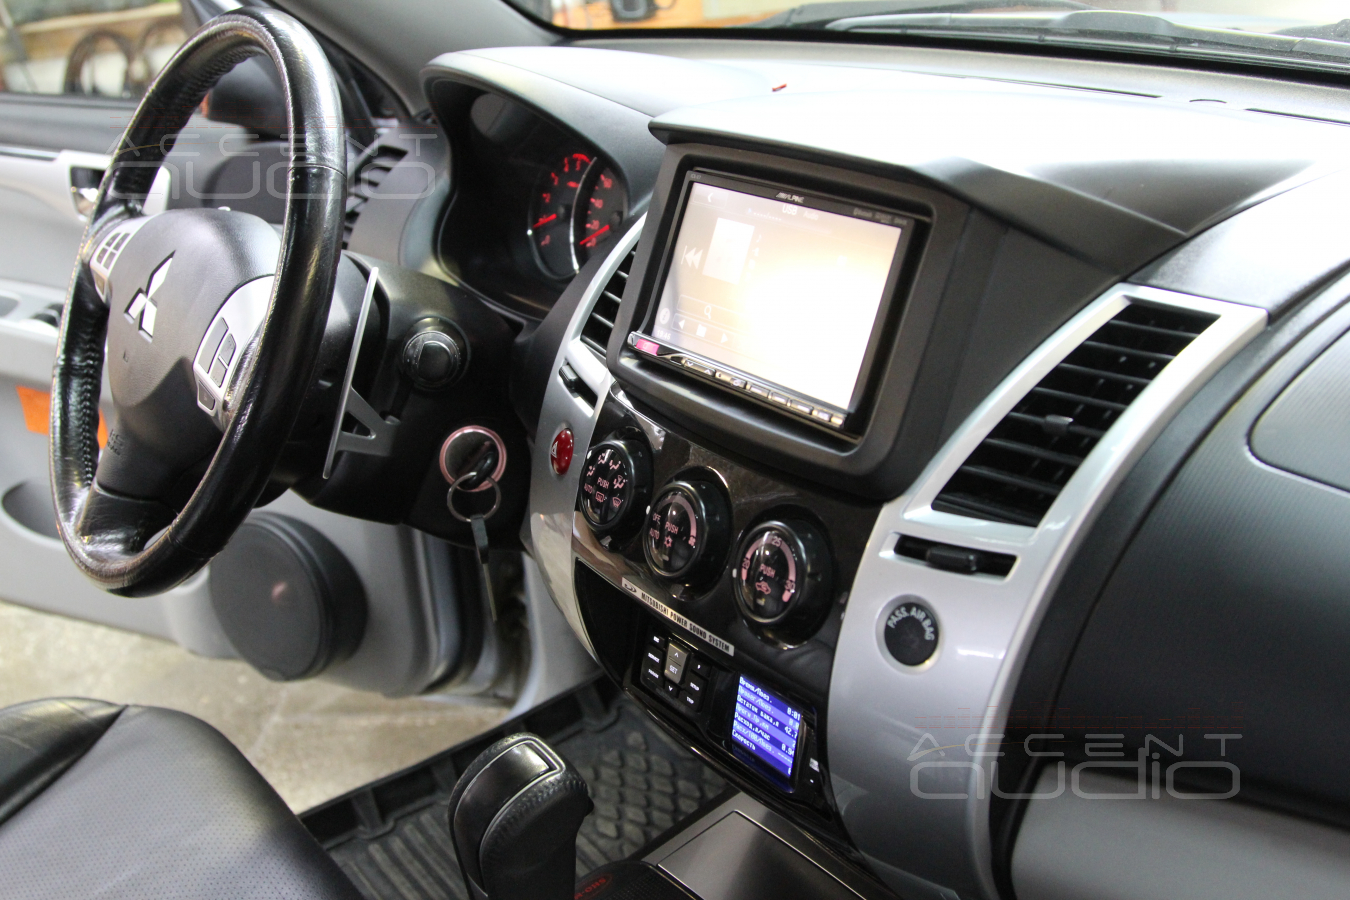 Мультимедиа для Mitsubishi Pajero Sport 2013: новое по-старому